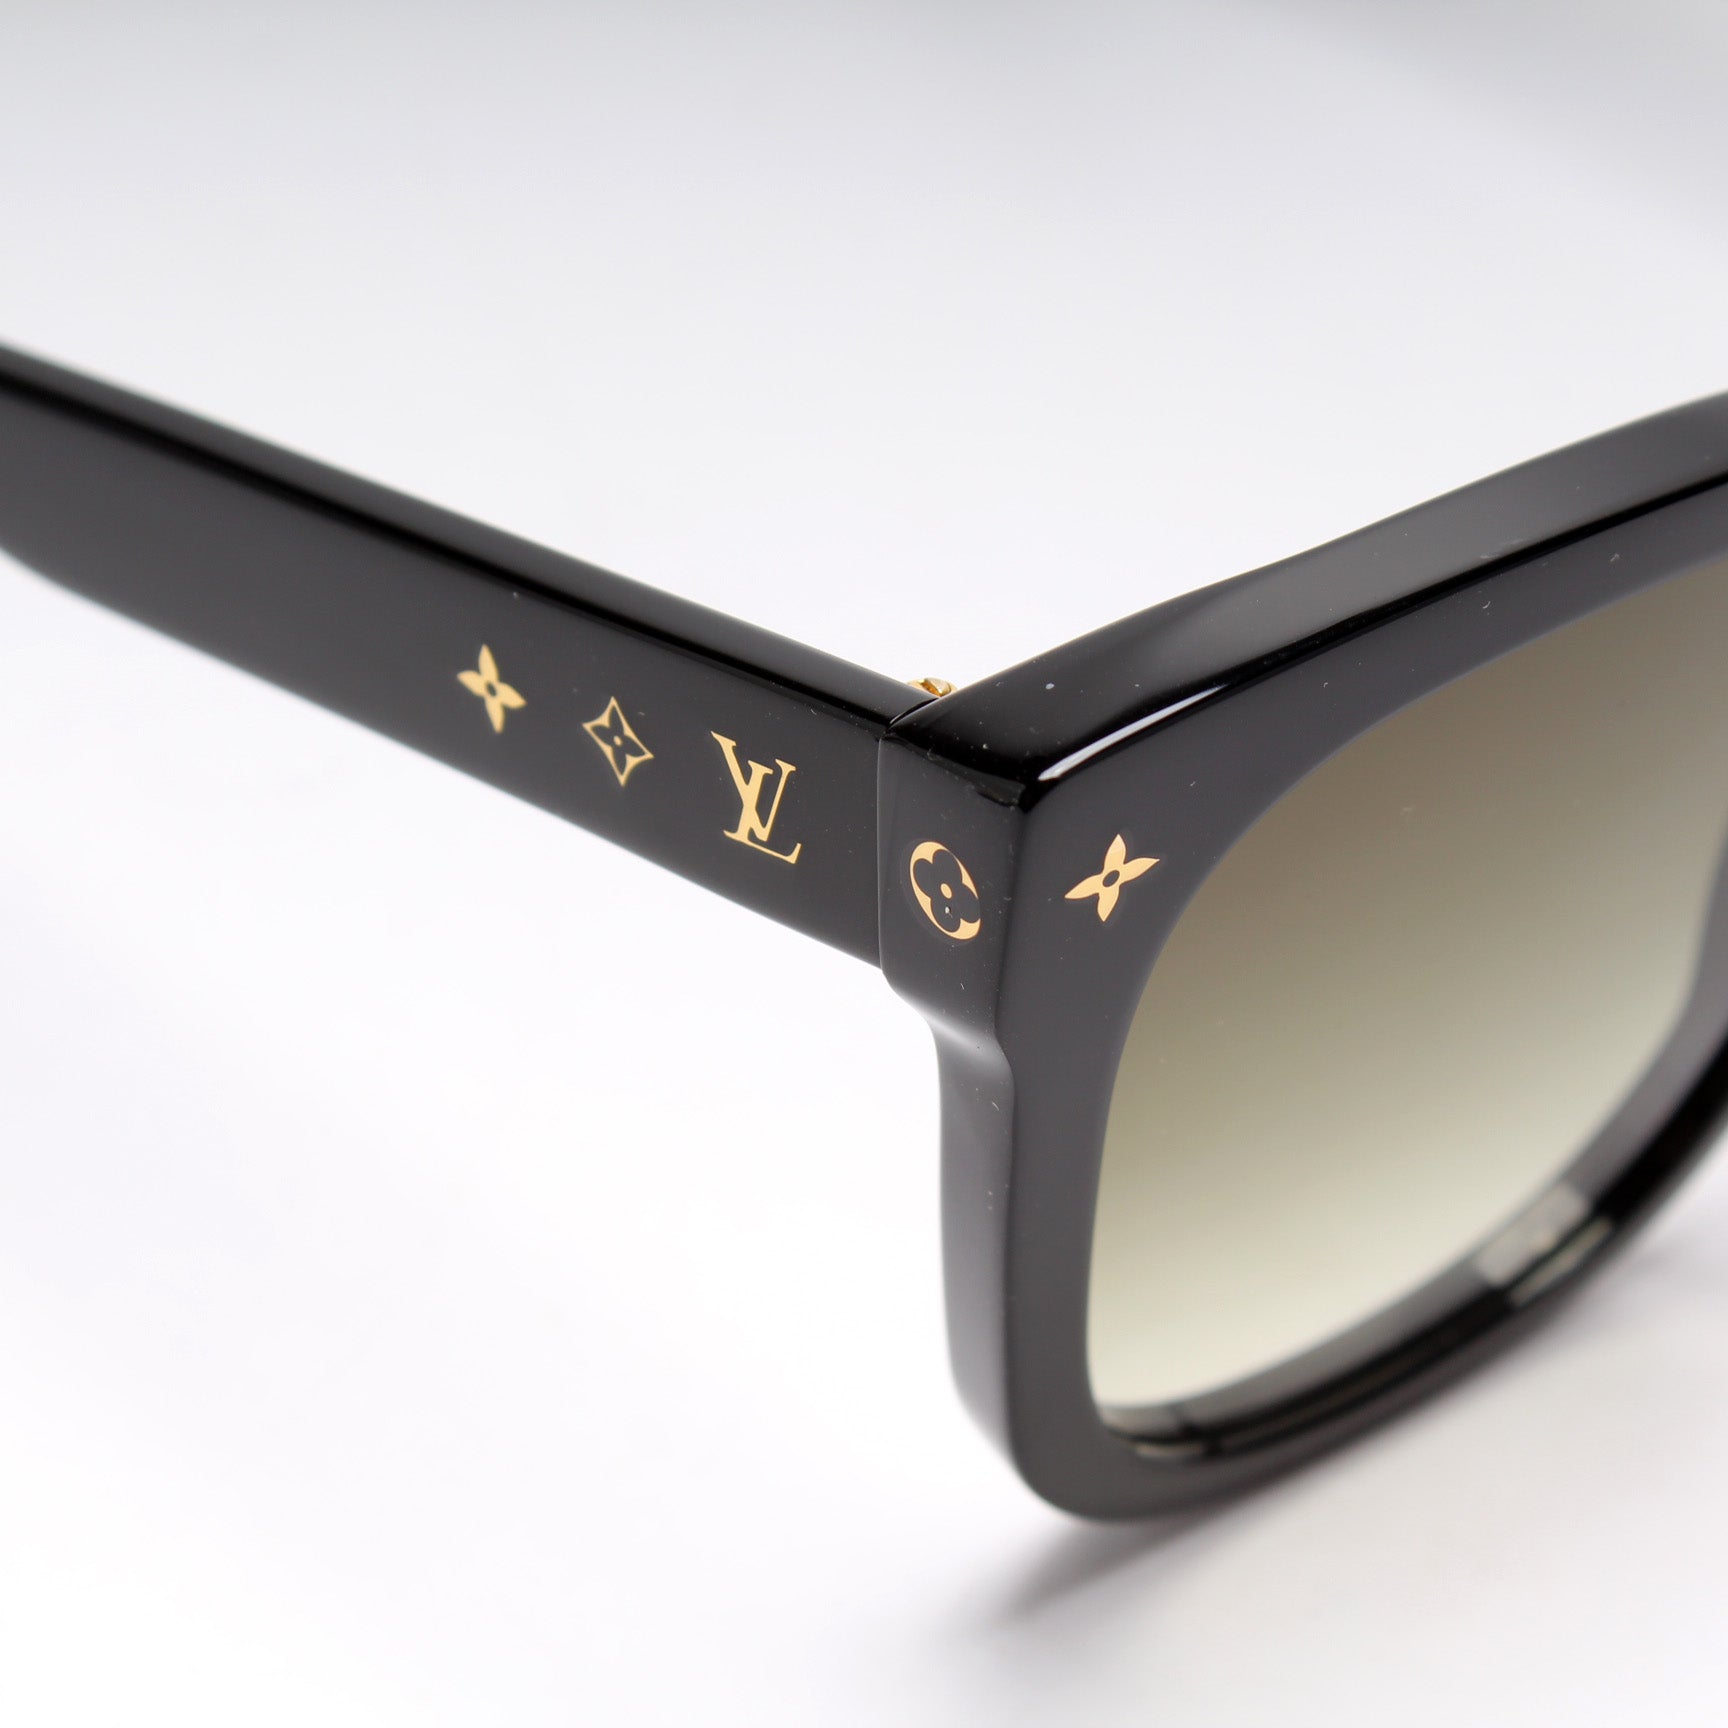 Louis Vuitton My Monogram Cat Eye Sunglasses Black (Z1729W)